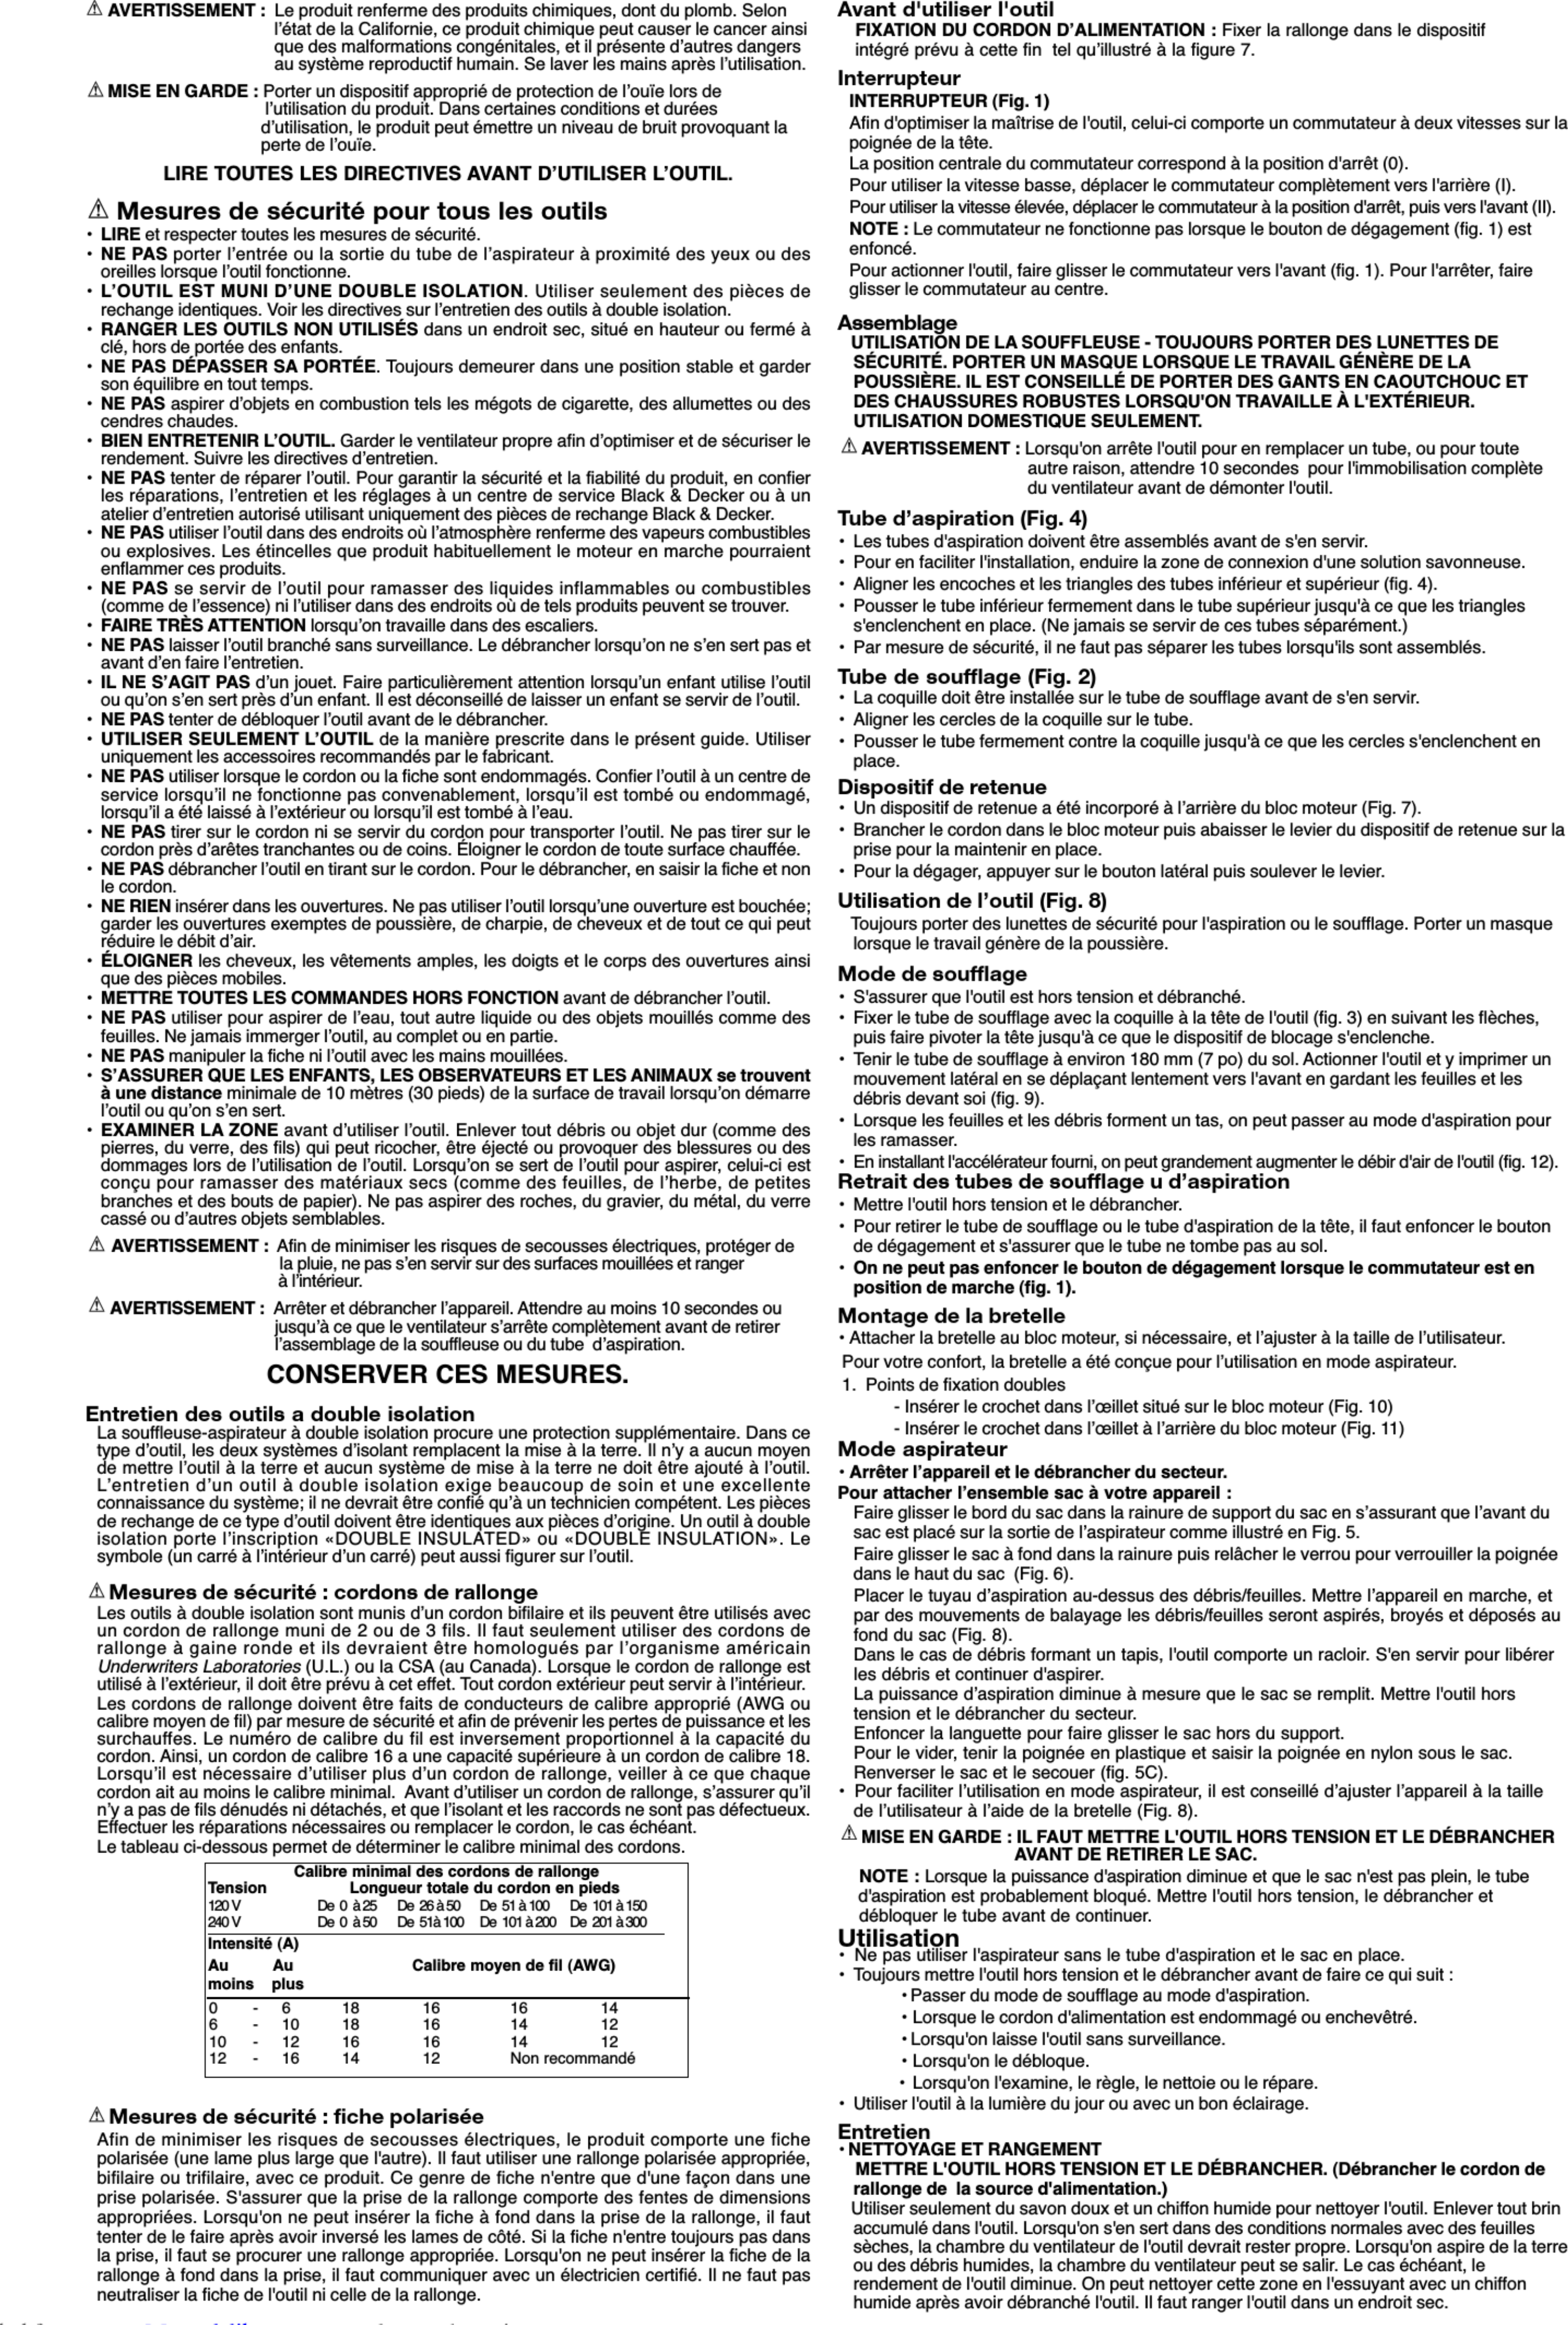 Page 3 of 5 - Black-And-Decker Black-And-Decker-Leaf-Hog-Bv4000-Instruction-Manual-1002745 User Manual